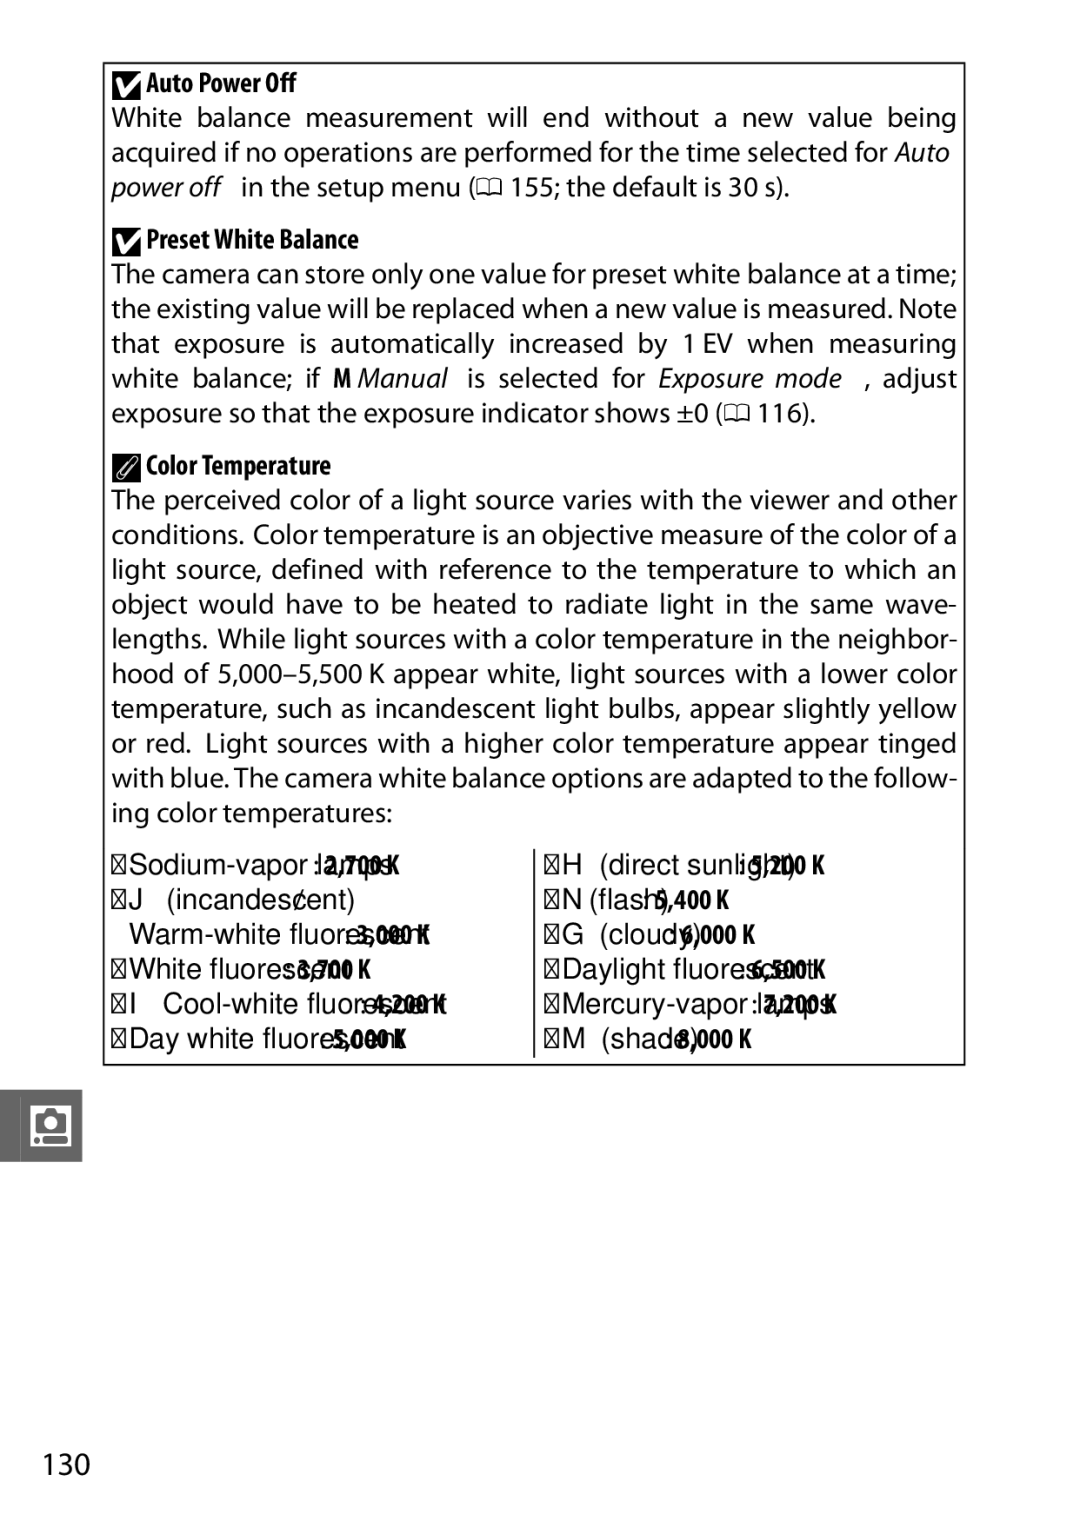 Nikon V1 manual 130, DAuto Power Off, DPreset White Balance, AColor Temperature 